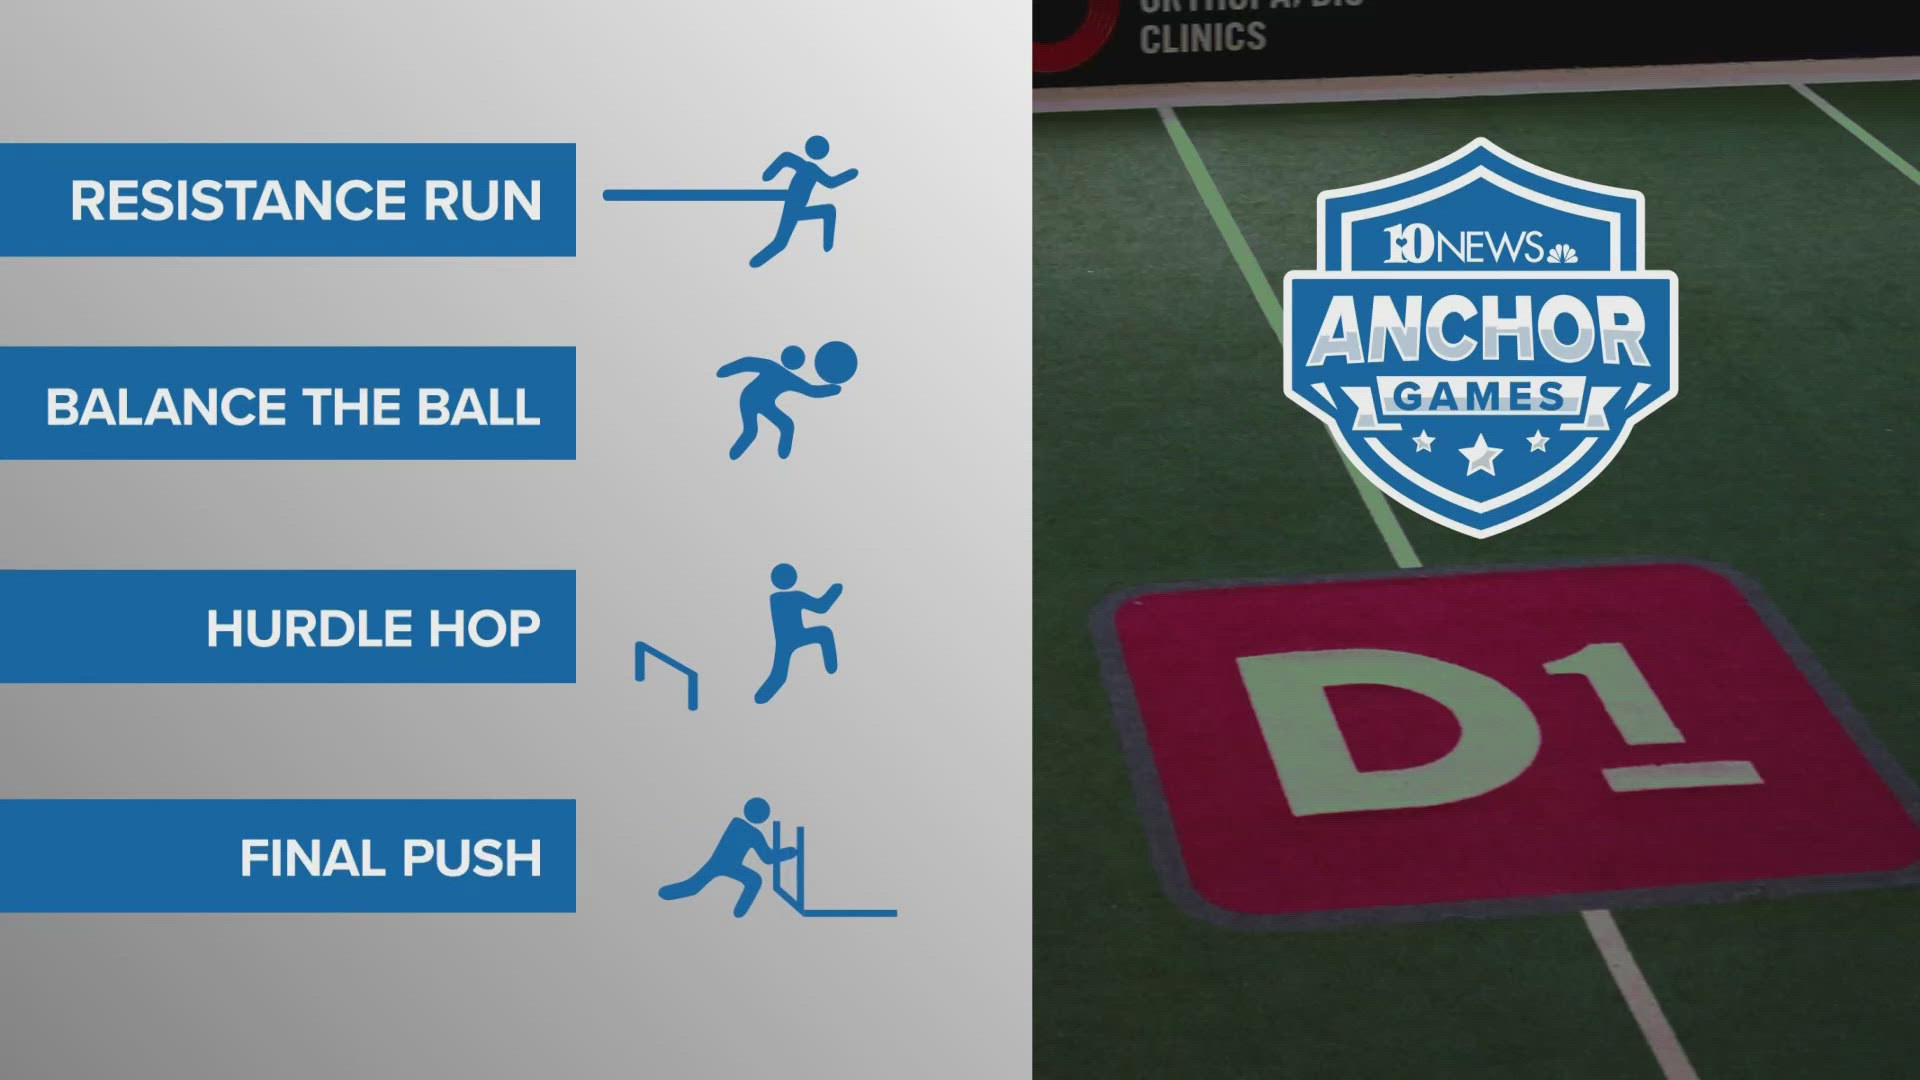 Resistance run, balance the ball, hurdle hop and final push... seems easy enough, right?